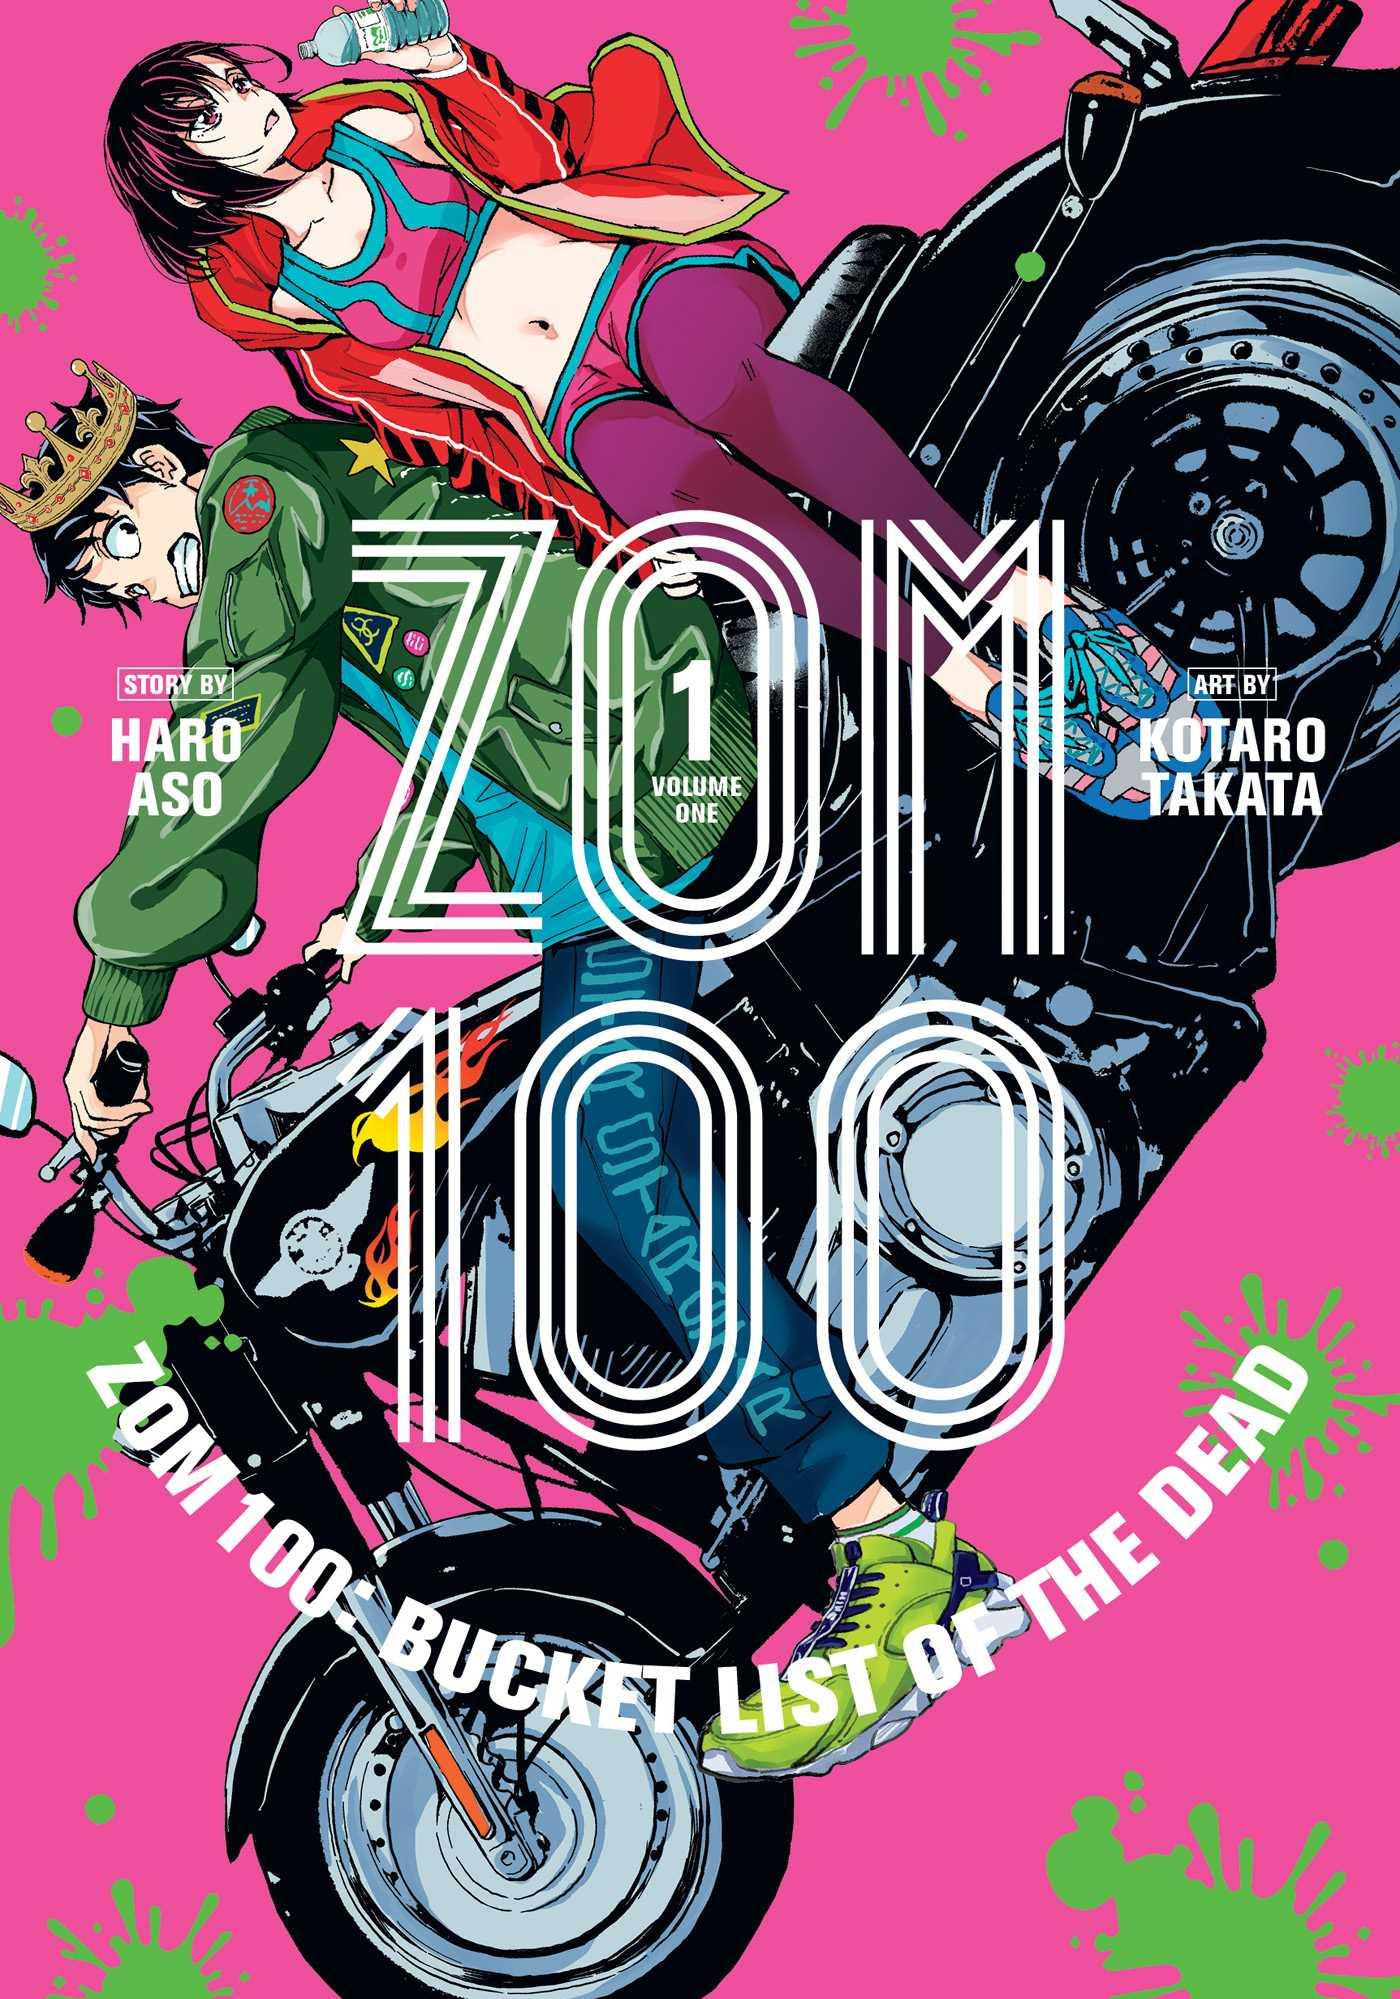 Zom 100 Bucket List of the Dead Vol 1 Book by Haro Aso